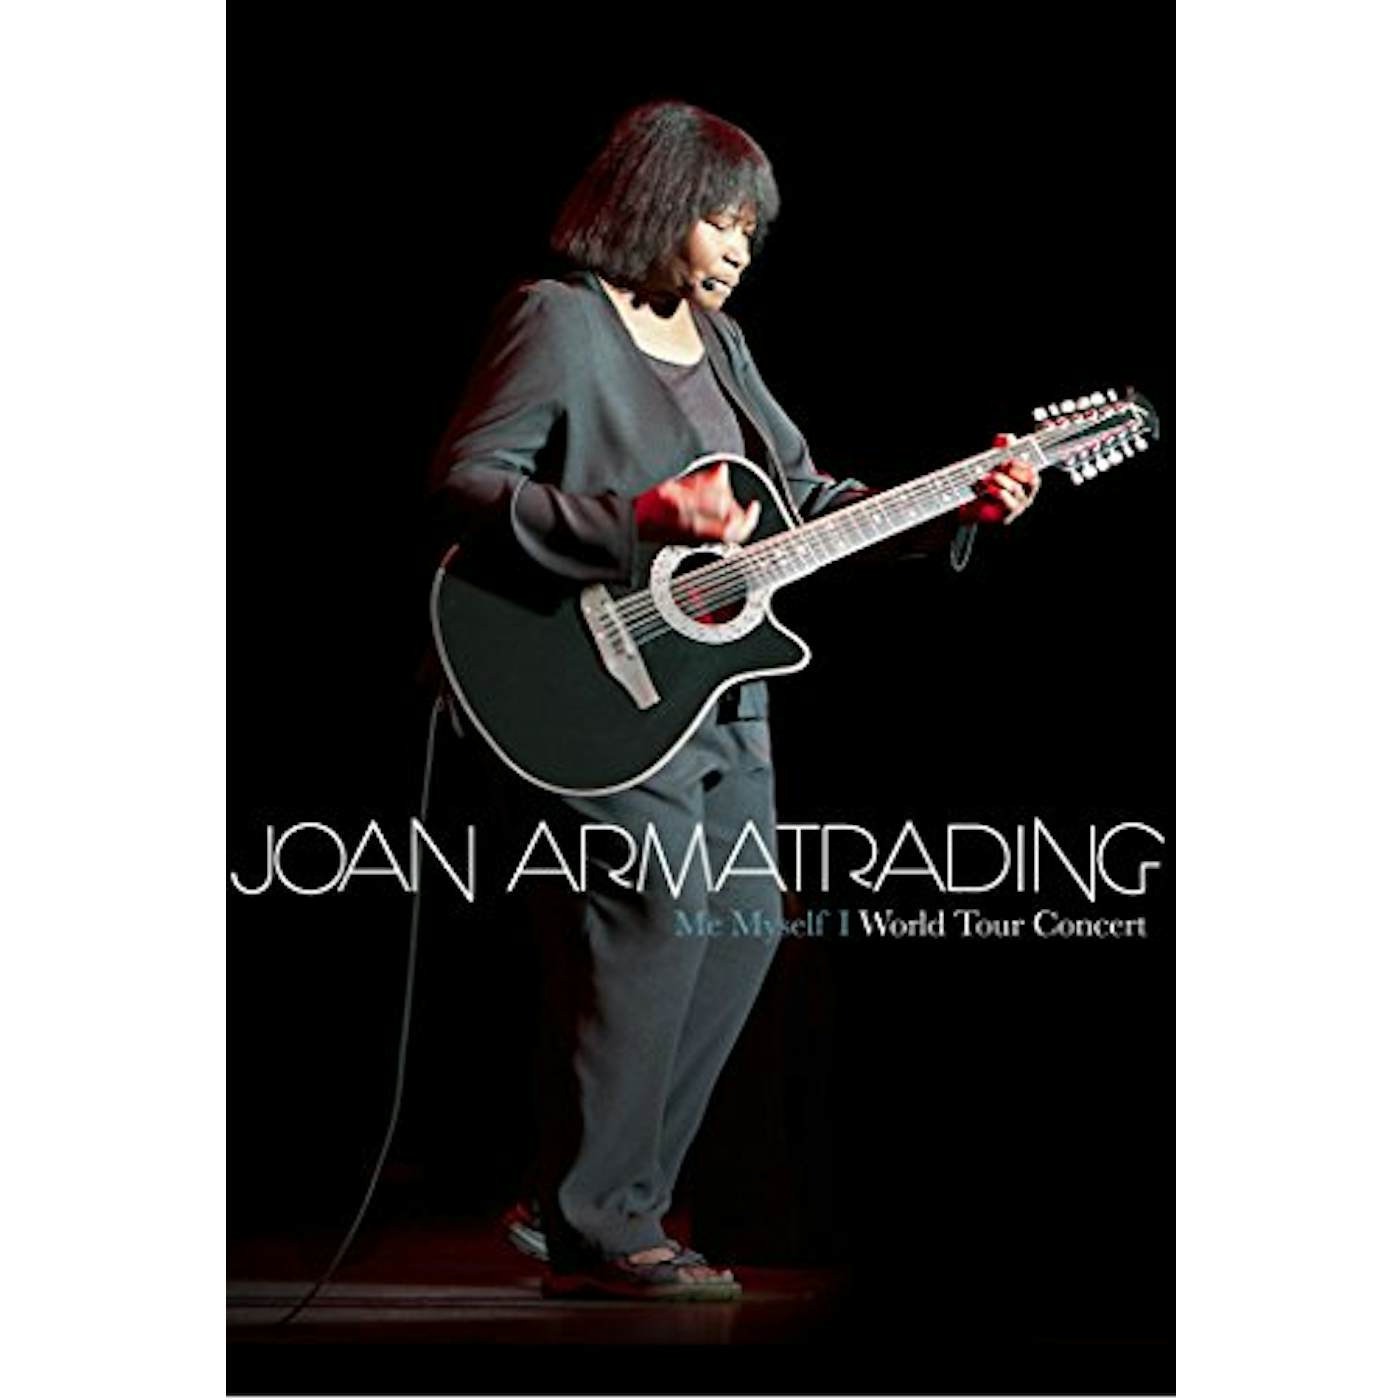 Joan Armatrading ME MYSELF I - WORLD TOUR CONCERT DVD